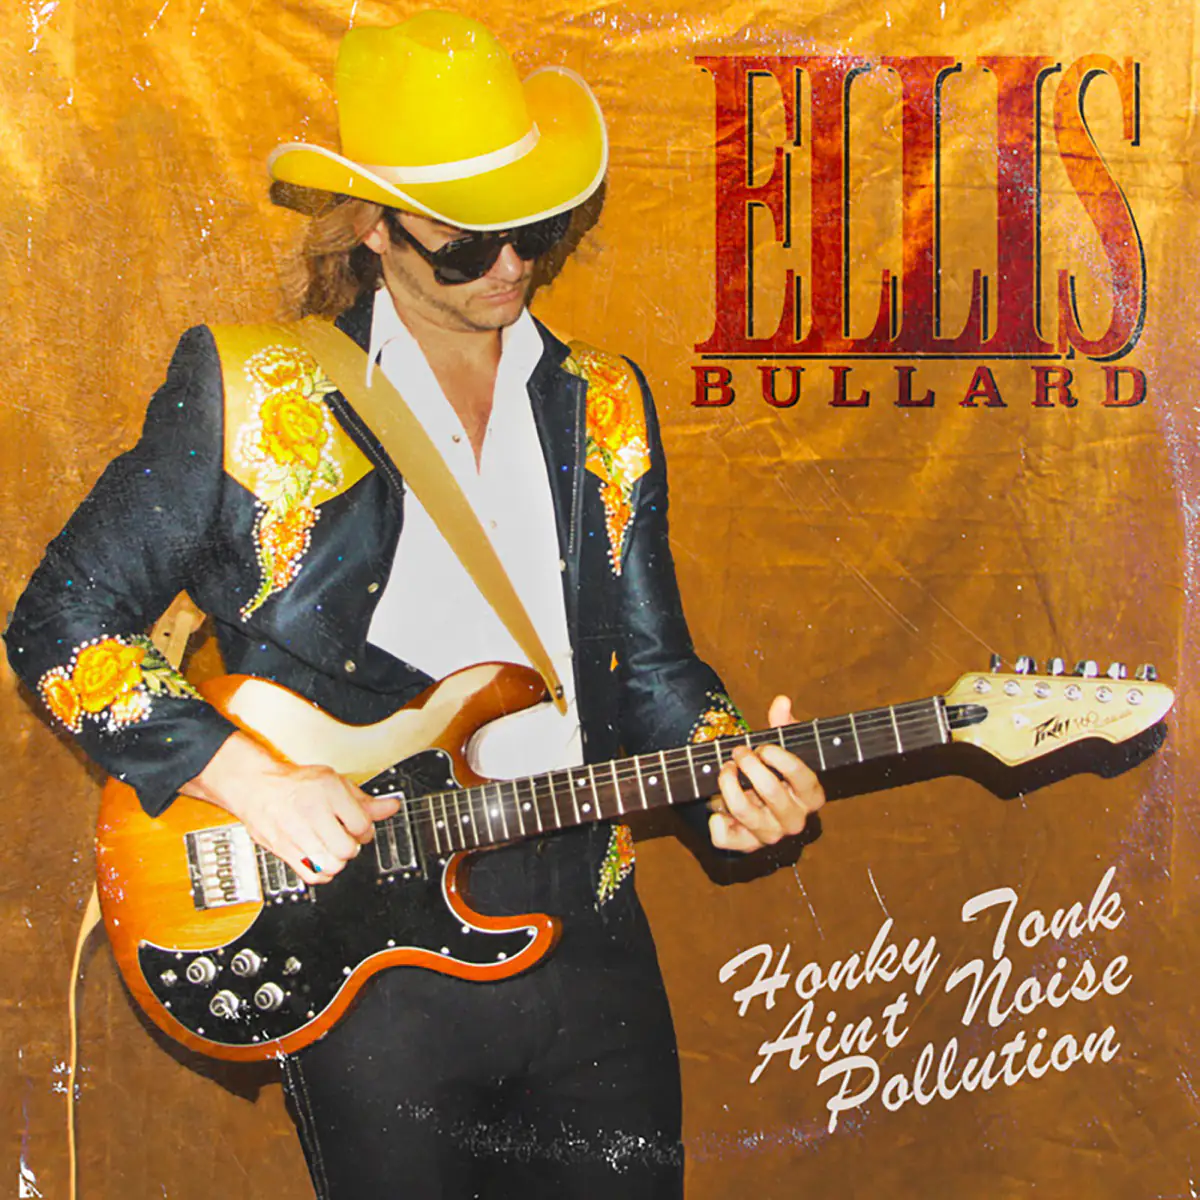 Ellis Bullard - Honky Tonk is not noise pollution